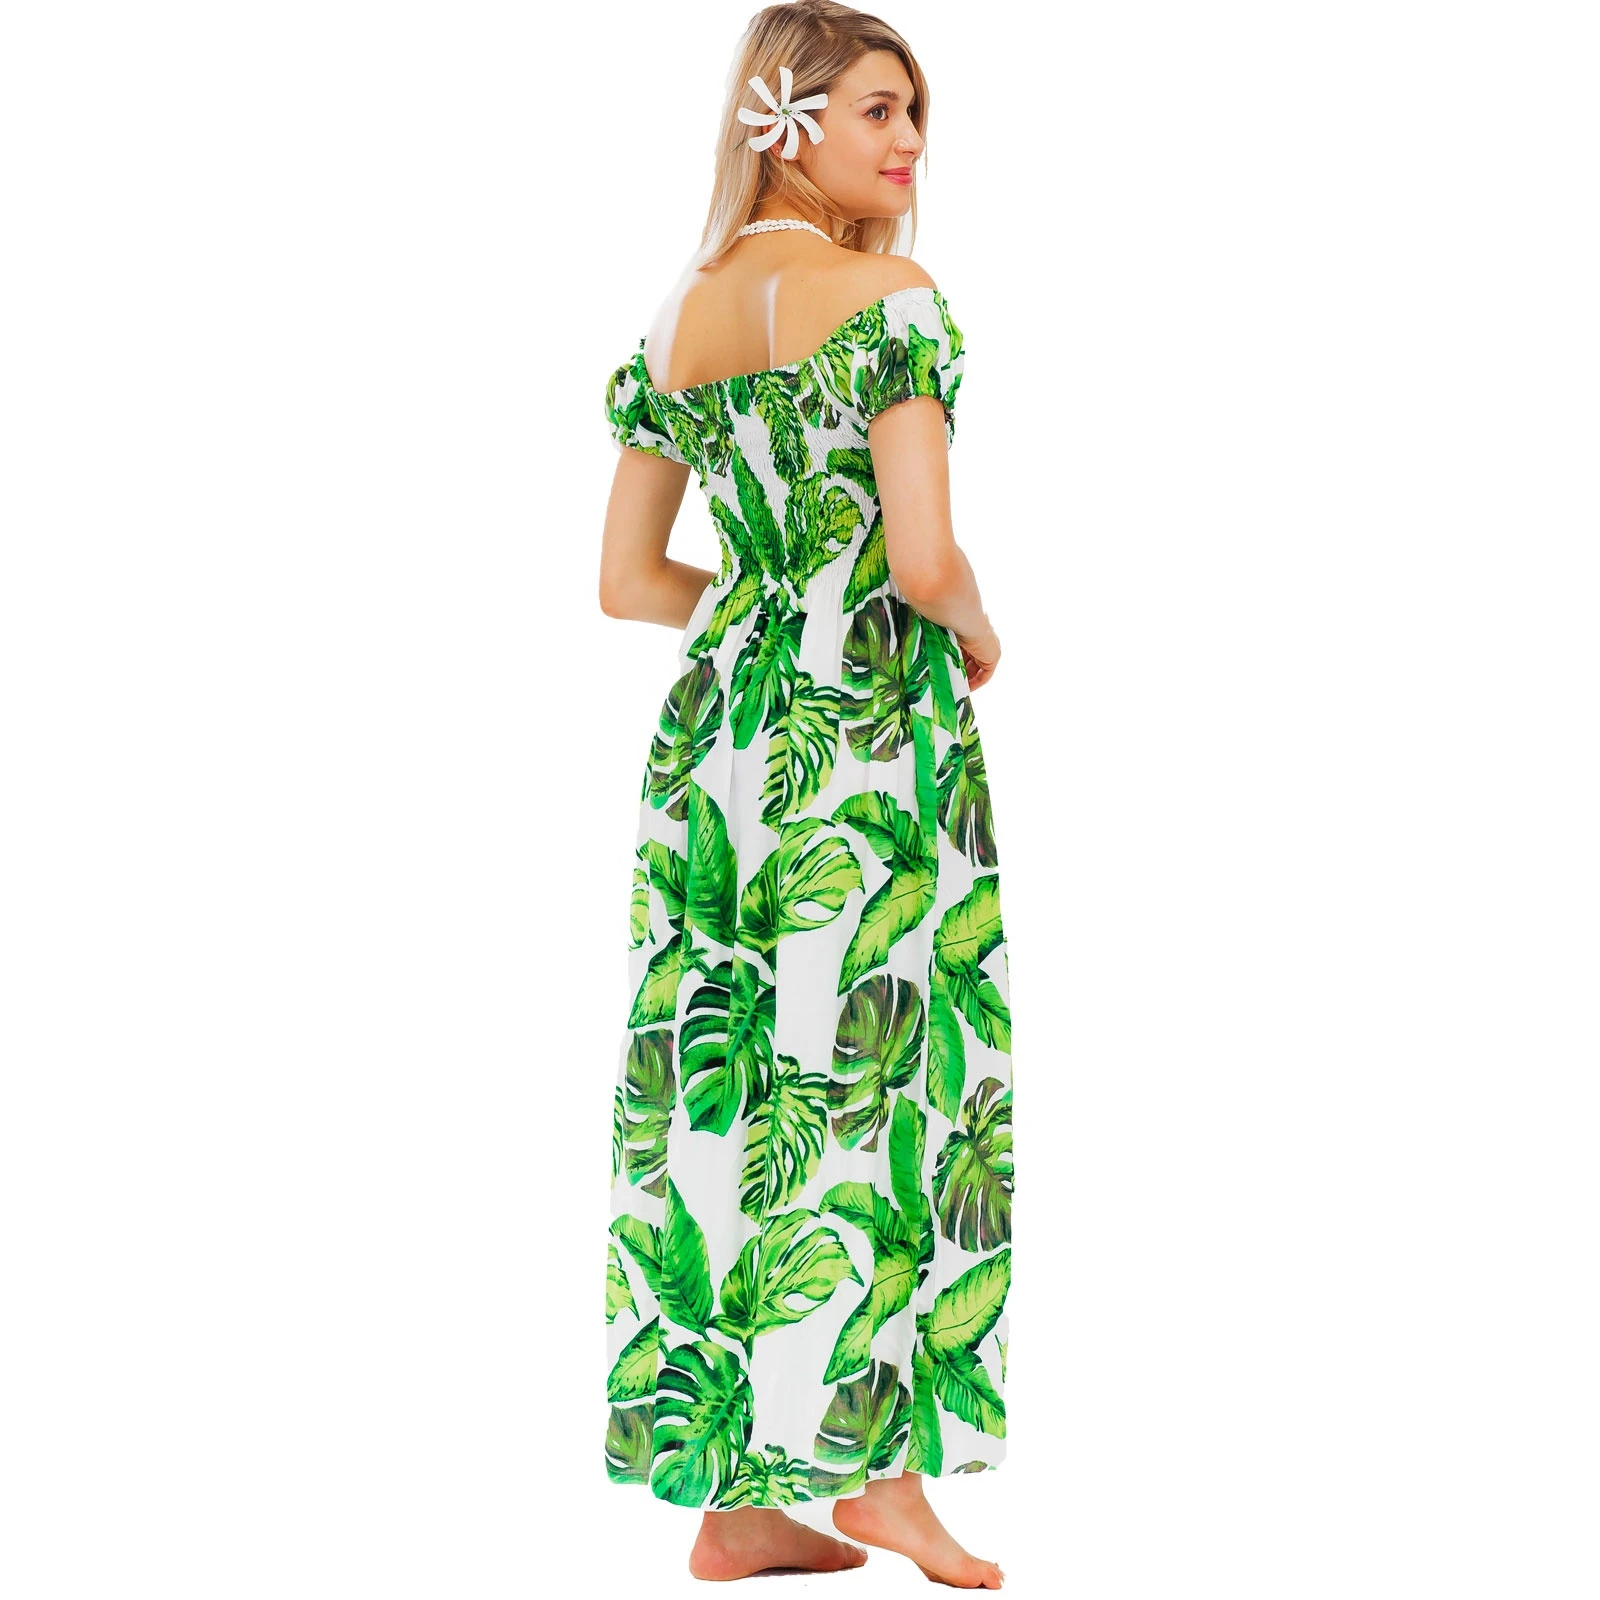 New fashion design women long dress tropical leaf printed casual dress summer beach dress